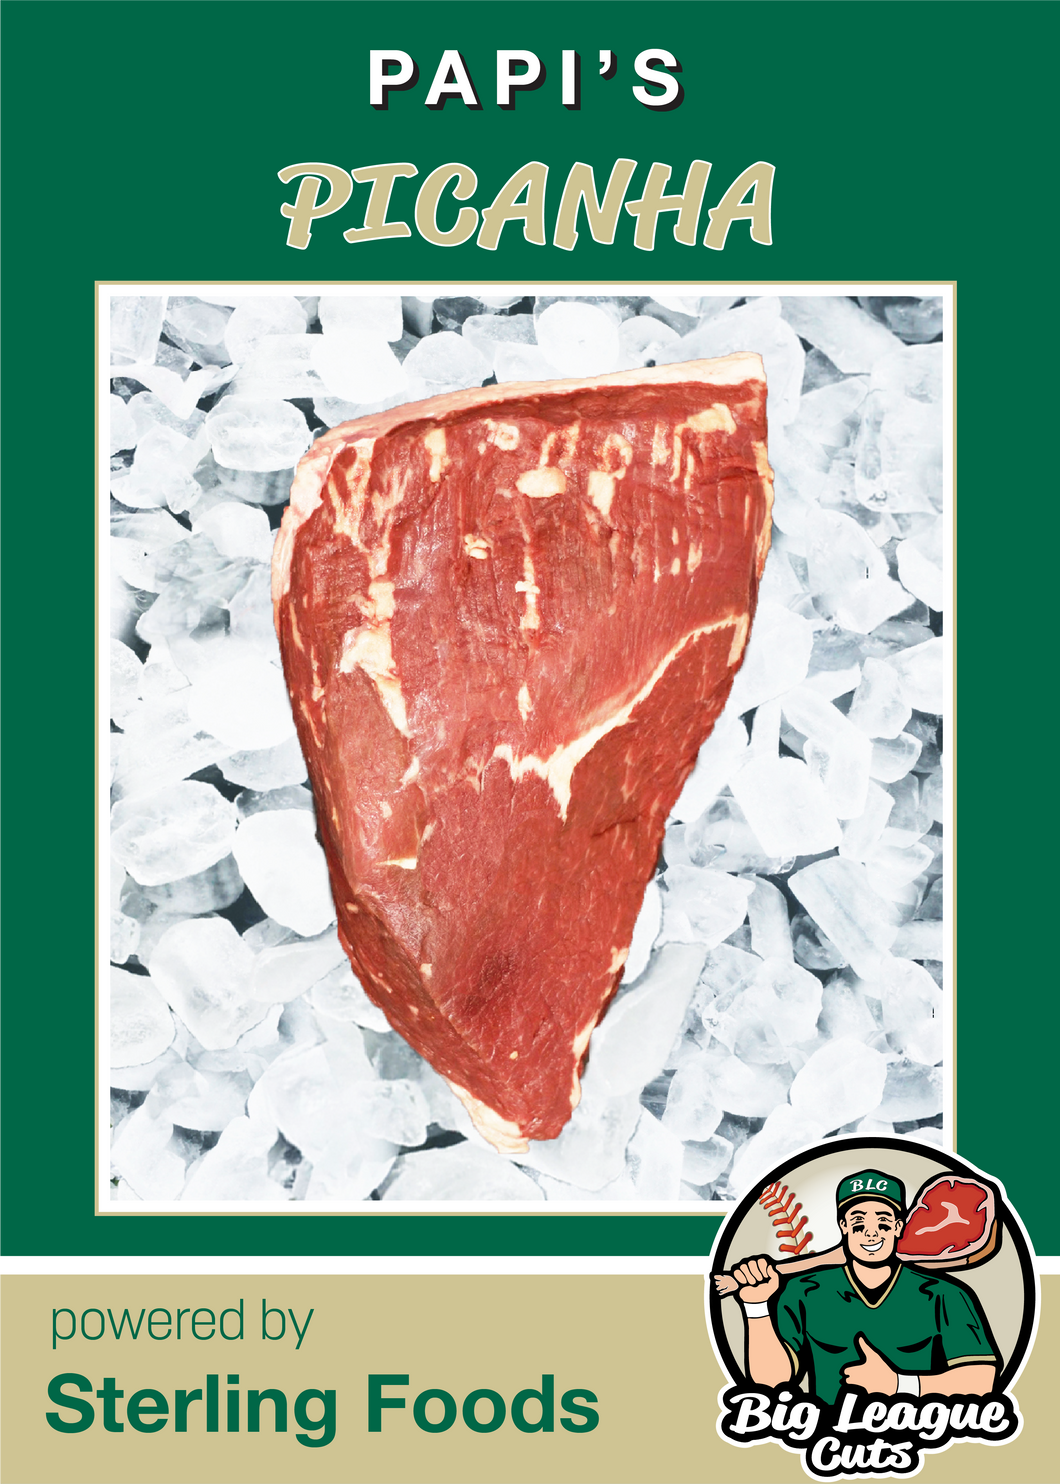 Papi's Picahna (1) 3.5 lbs. piece